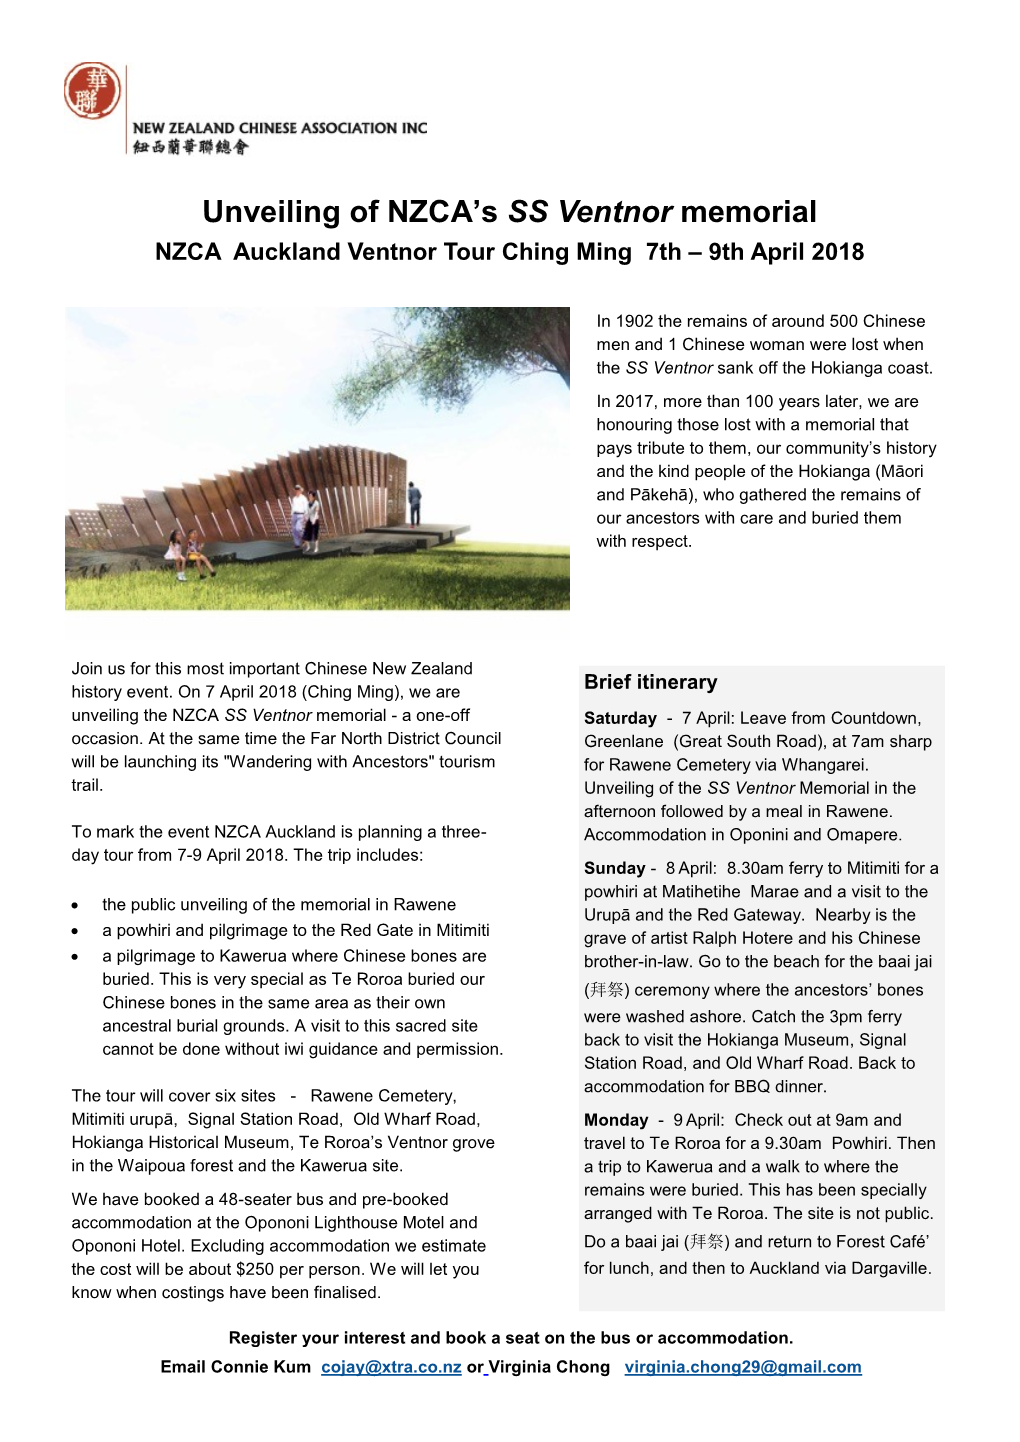 Unveiling of NZCA's SS Ventnor Memorial